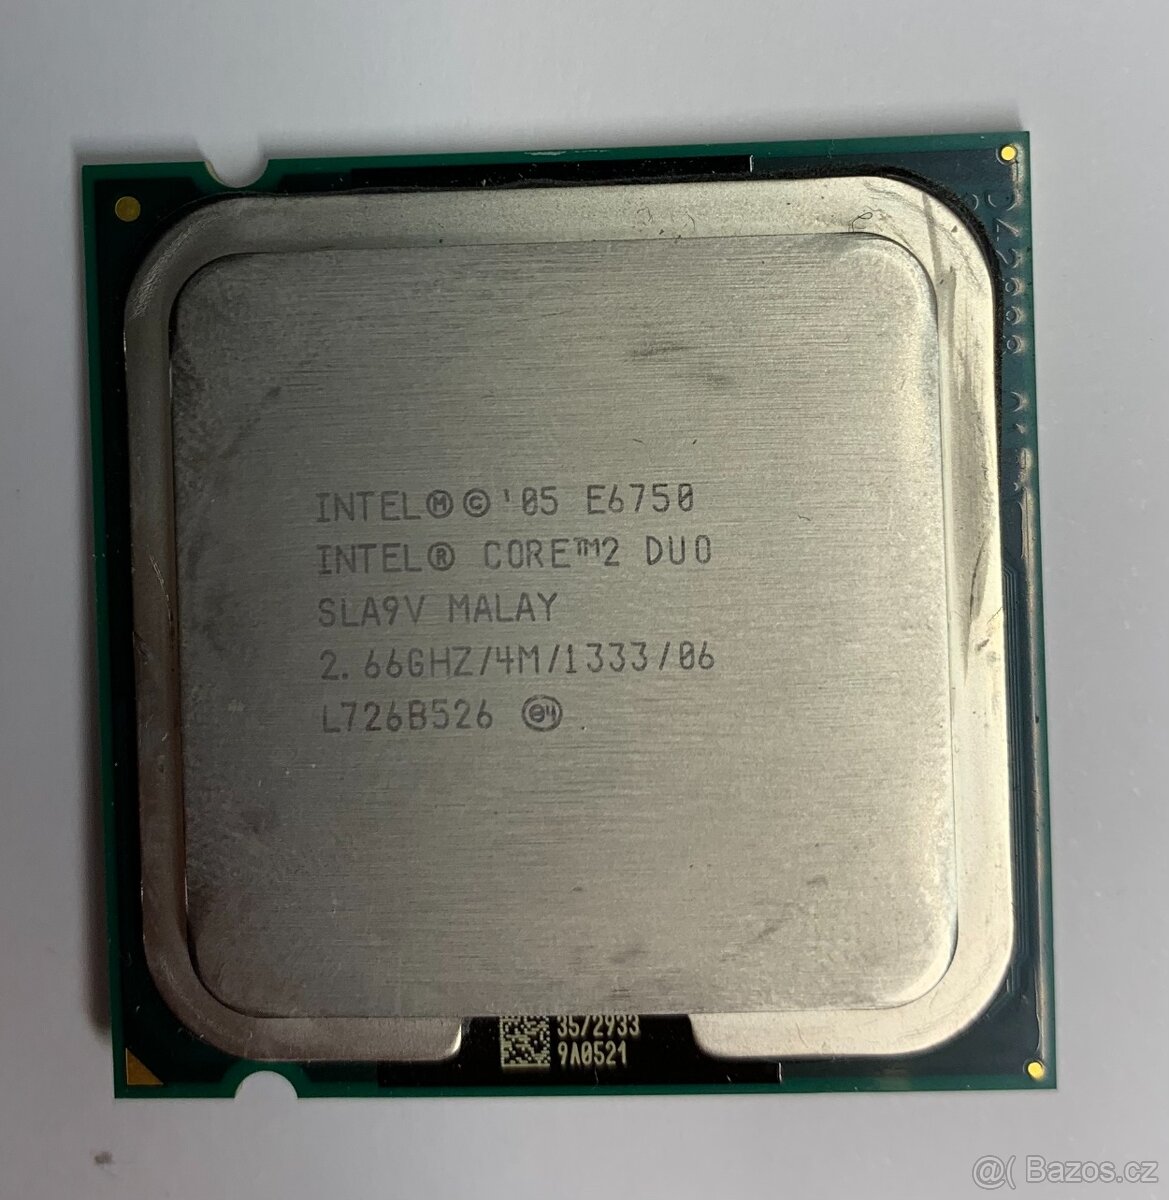 Intel Core2Duo E6750